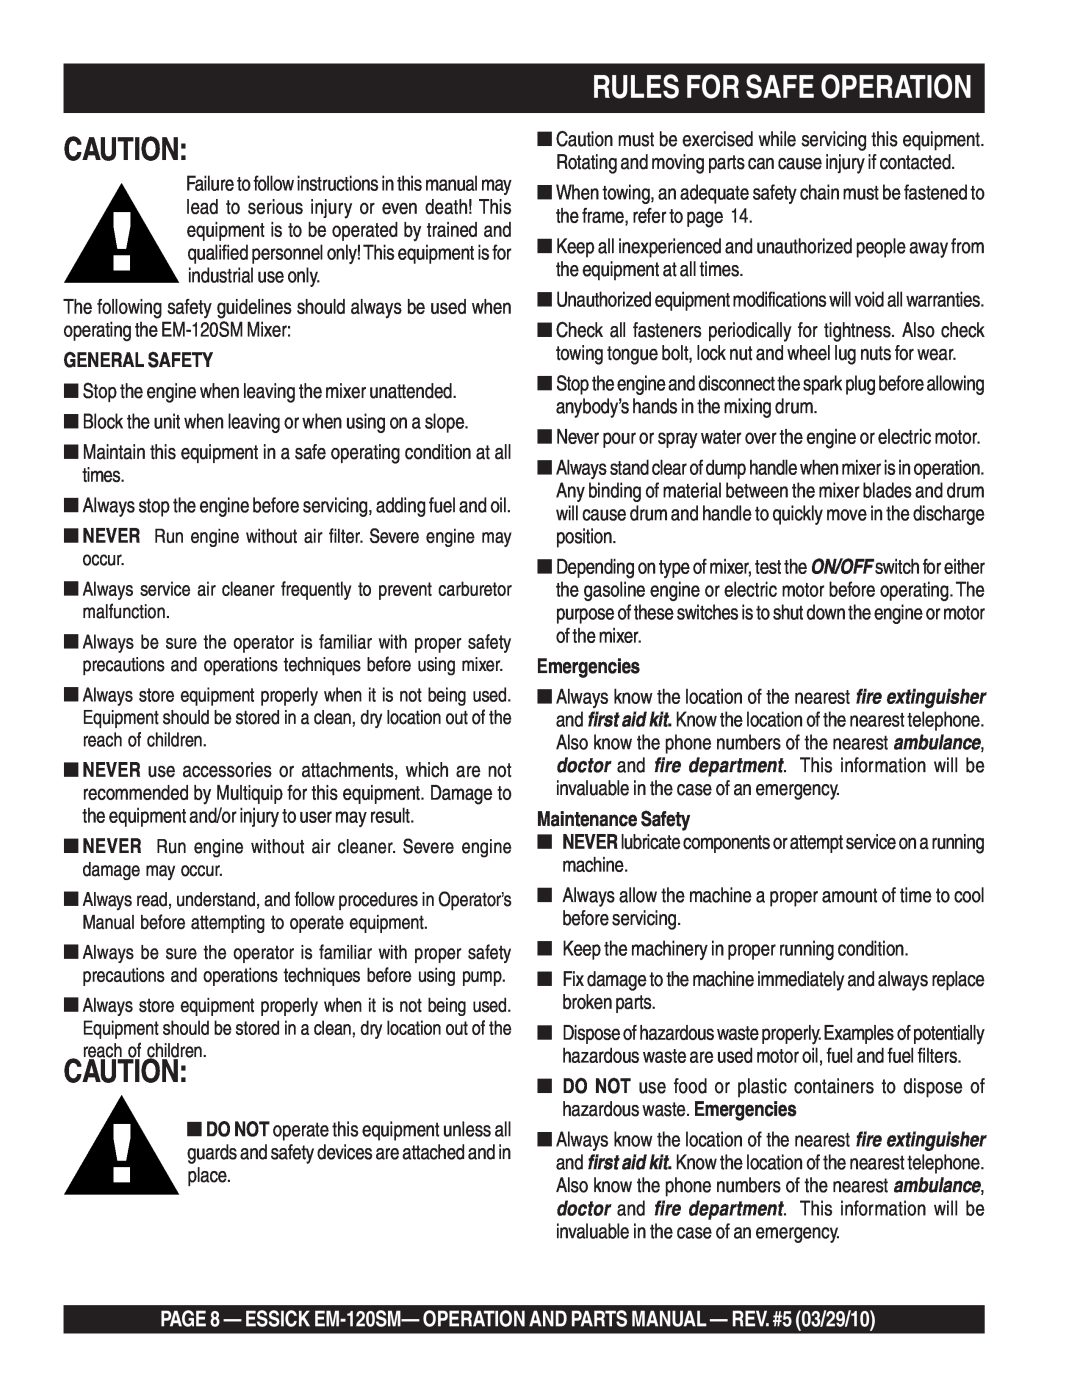 Multiquip EM-120SM manual Rules For Safe Operation, General Safety, Emergencies, Maintenance Safety 